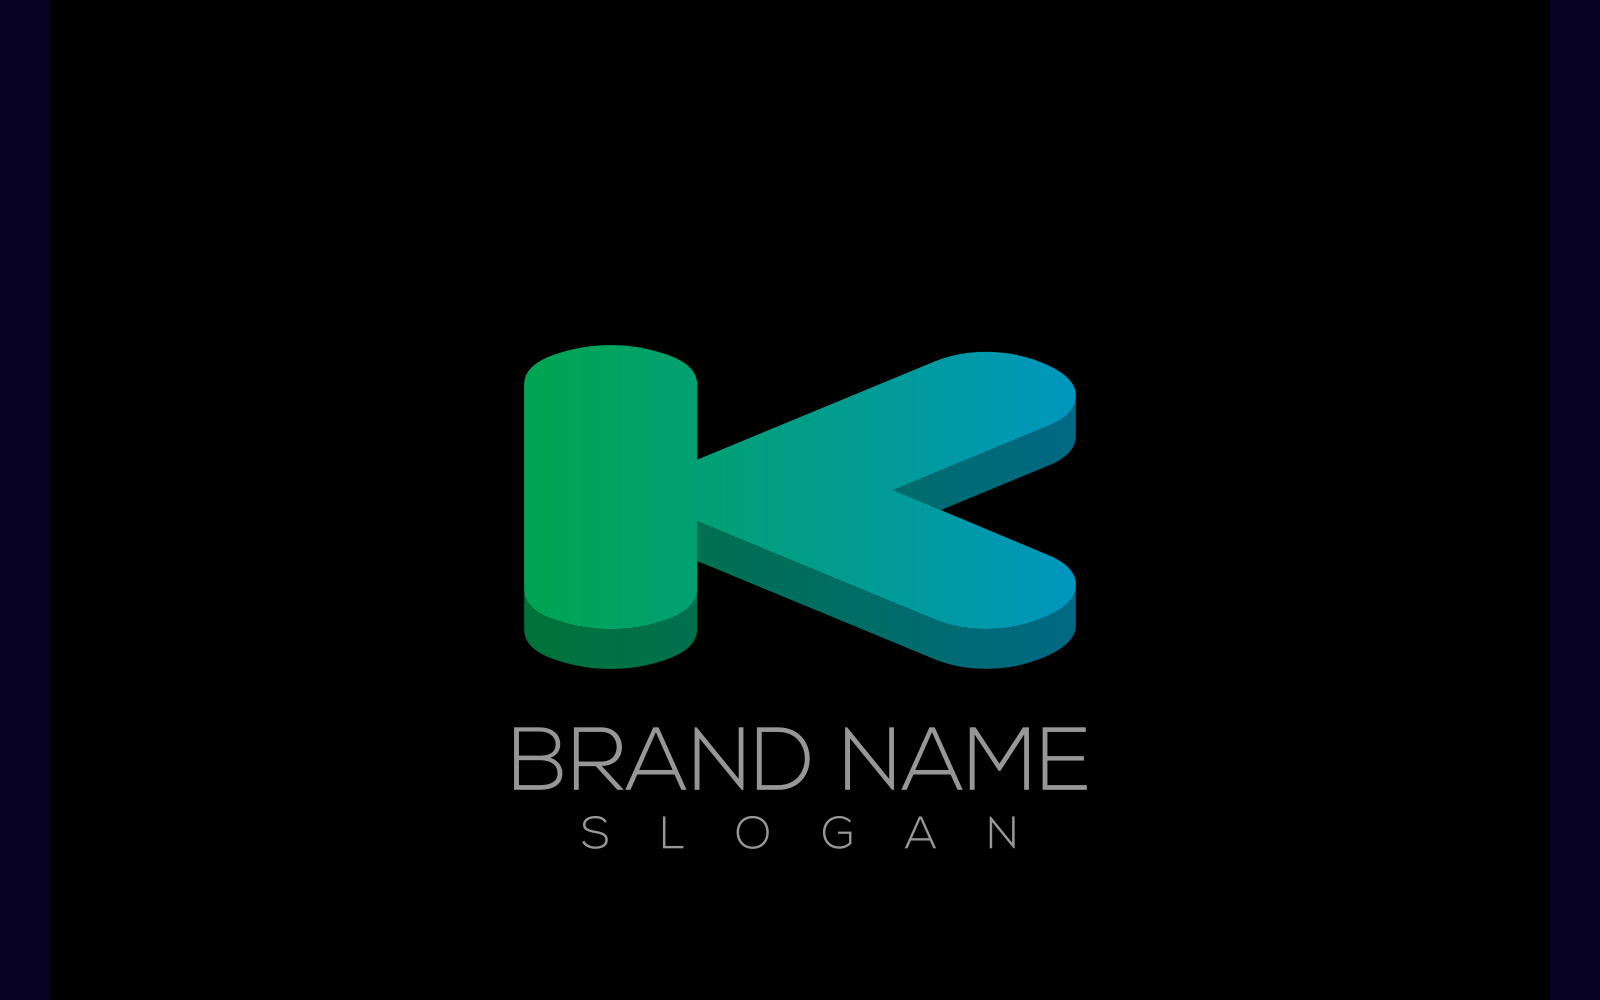 3D K Logo Vector | Gradient 3D Letter K Vector Logo Design